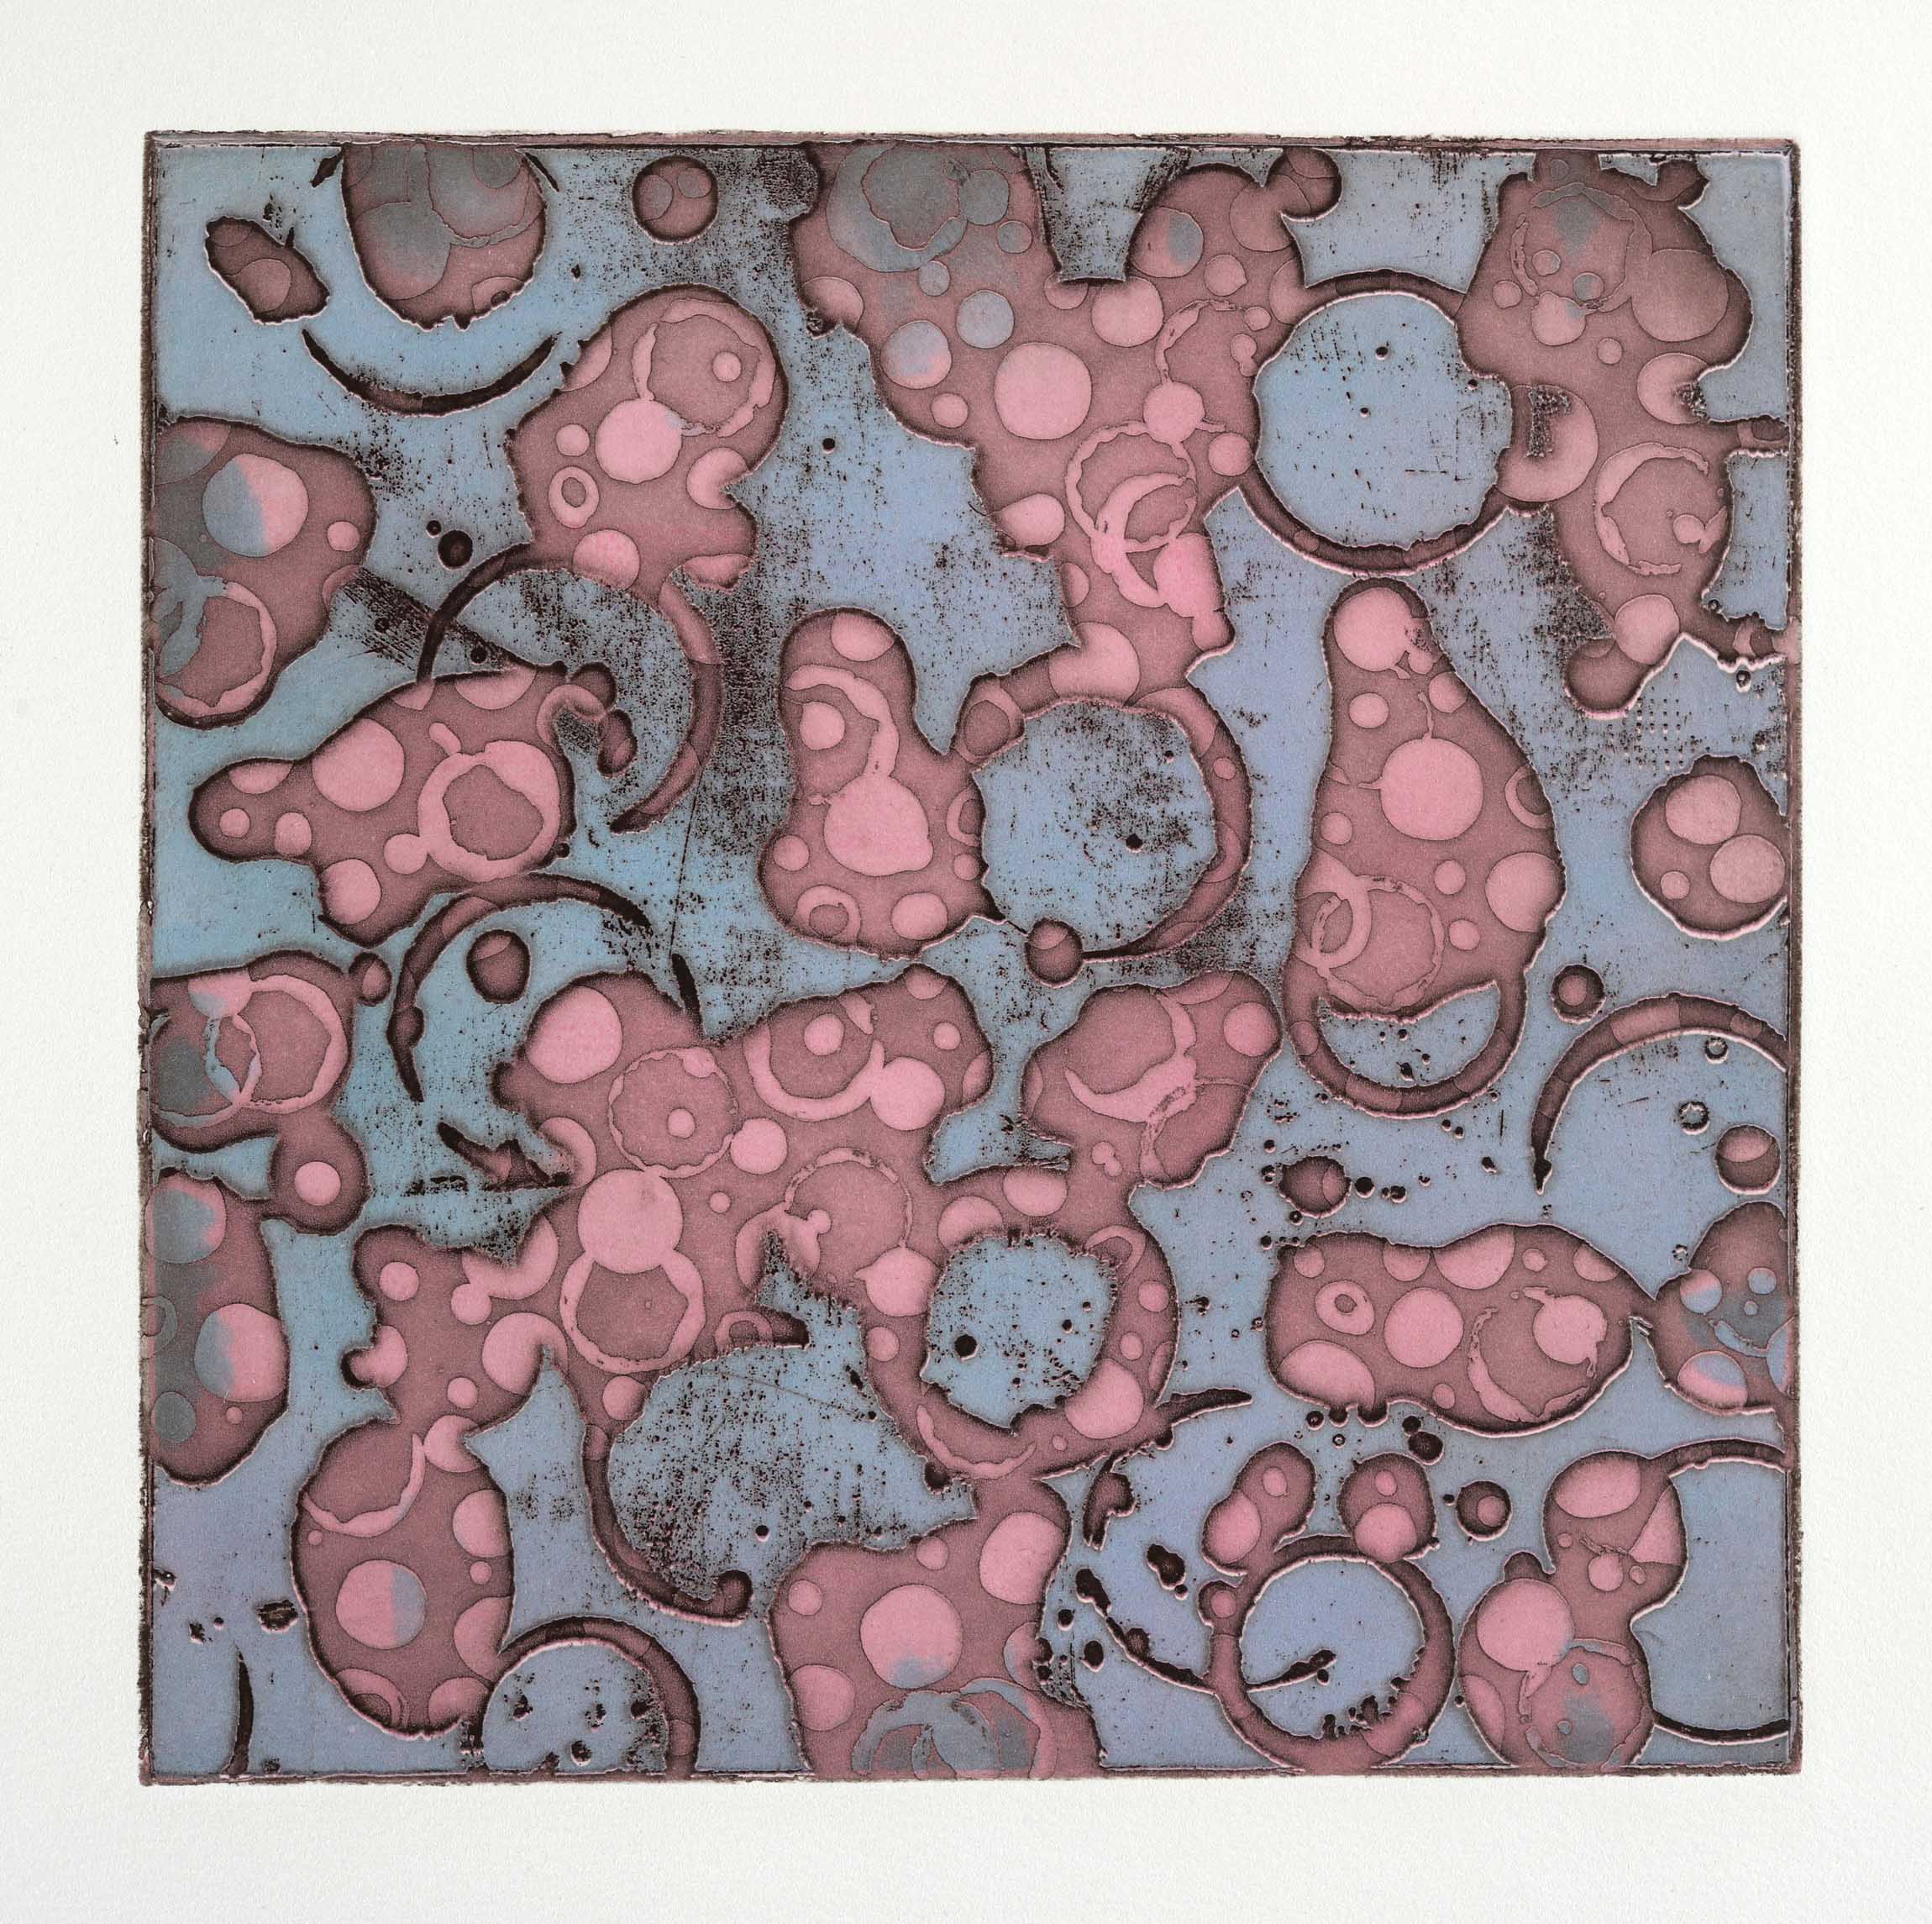 ‘Abstraction’ Deep Etched Multi-Color Viscosity Intaglio Print (2020)